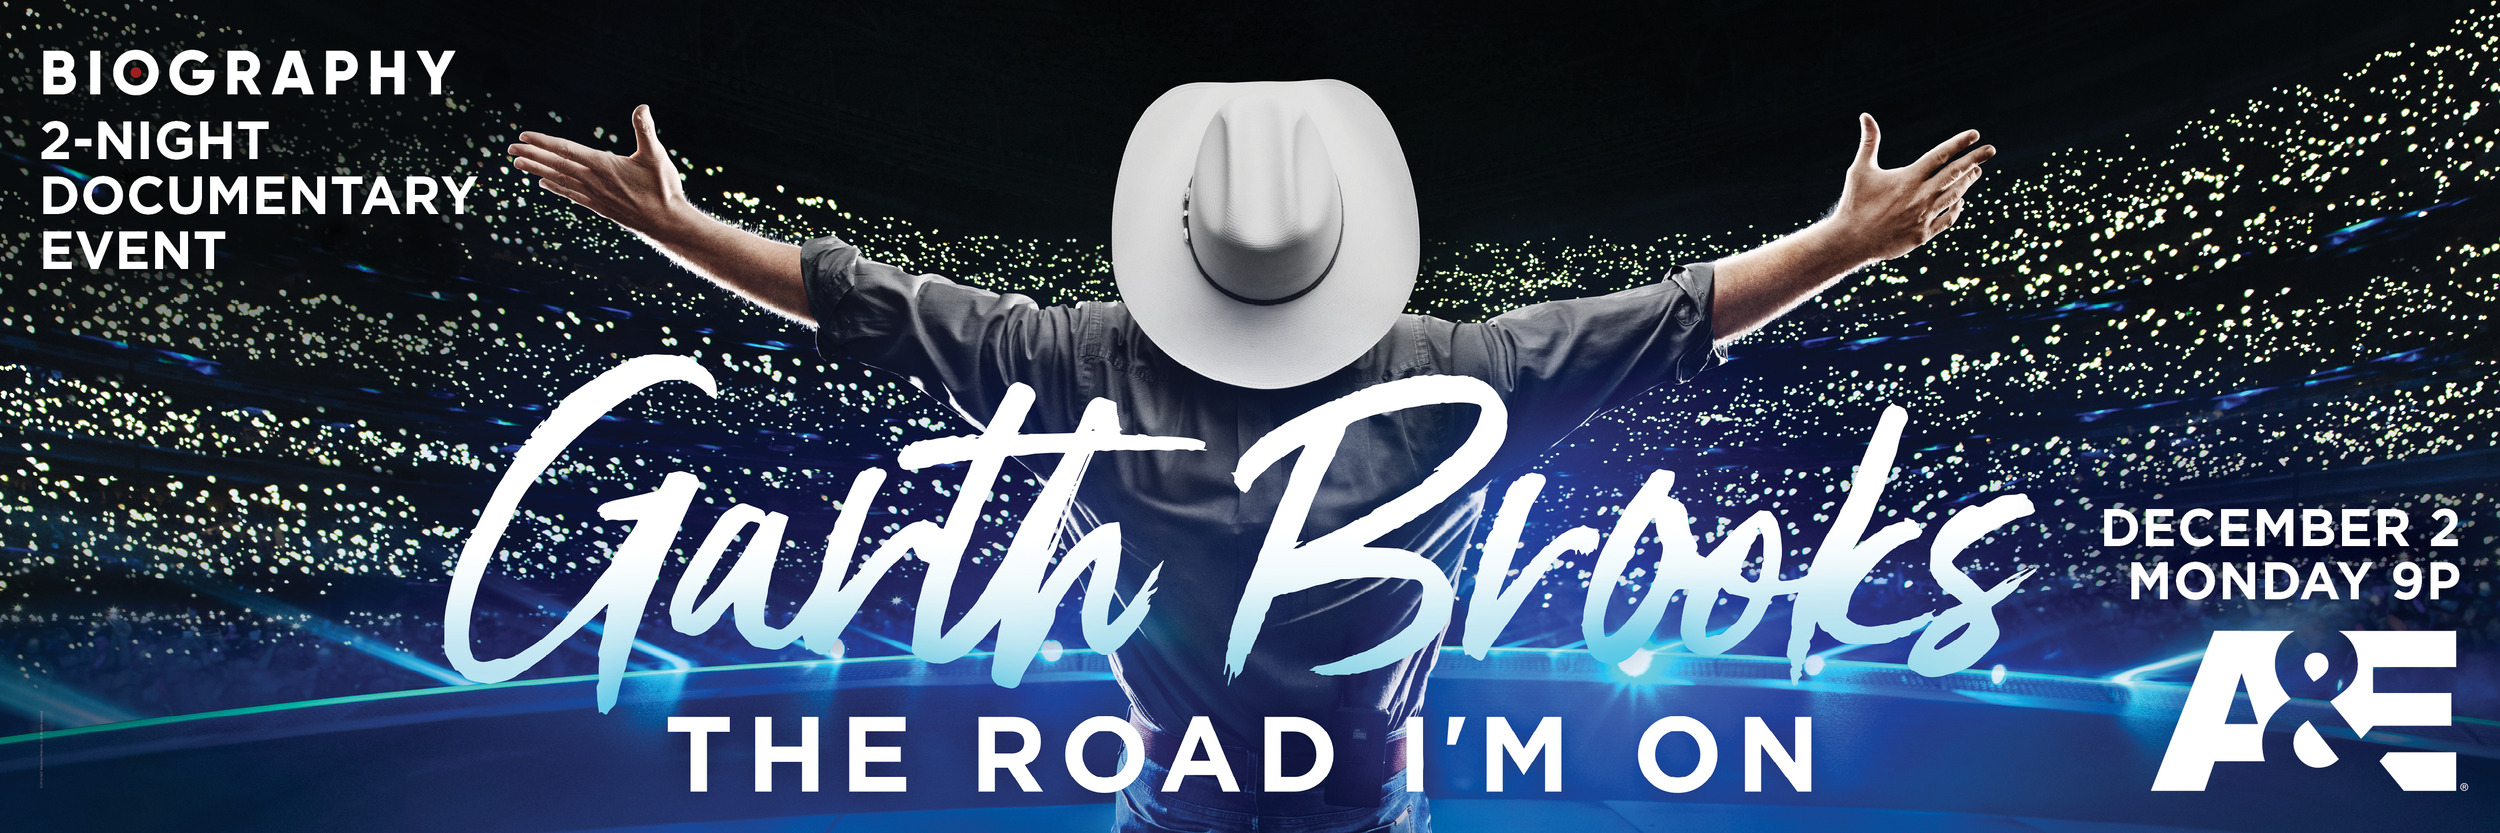 Mega Sized TV Poster Image for Garth Brooks: The Road I'm On (#2 of 2)